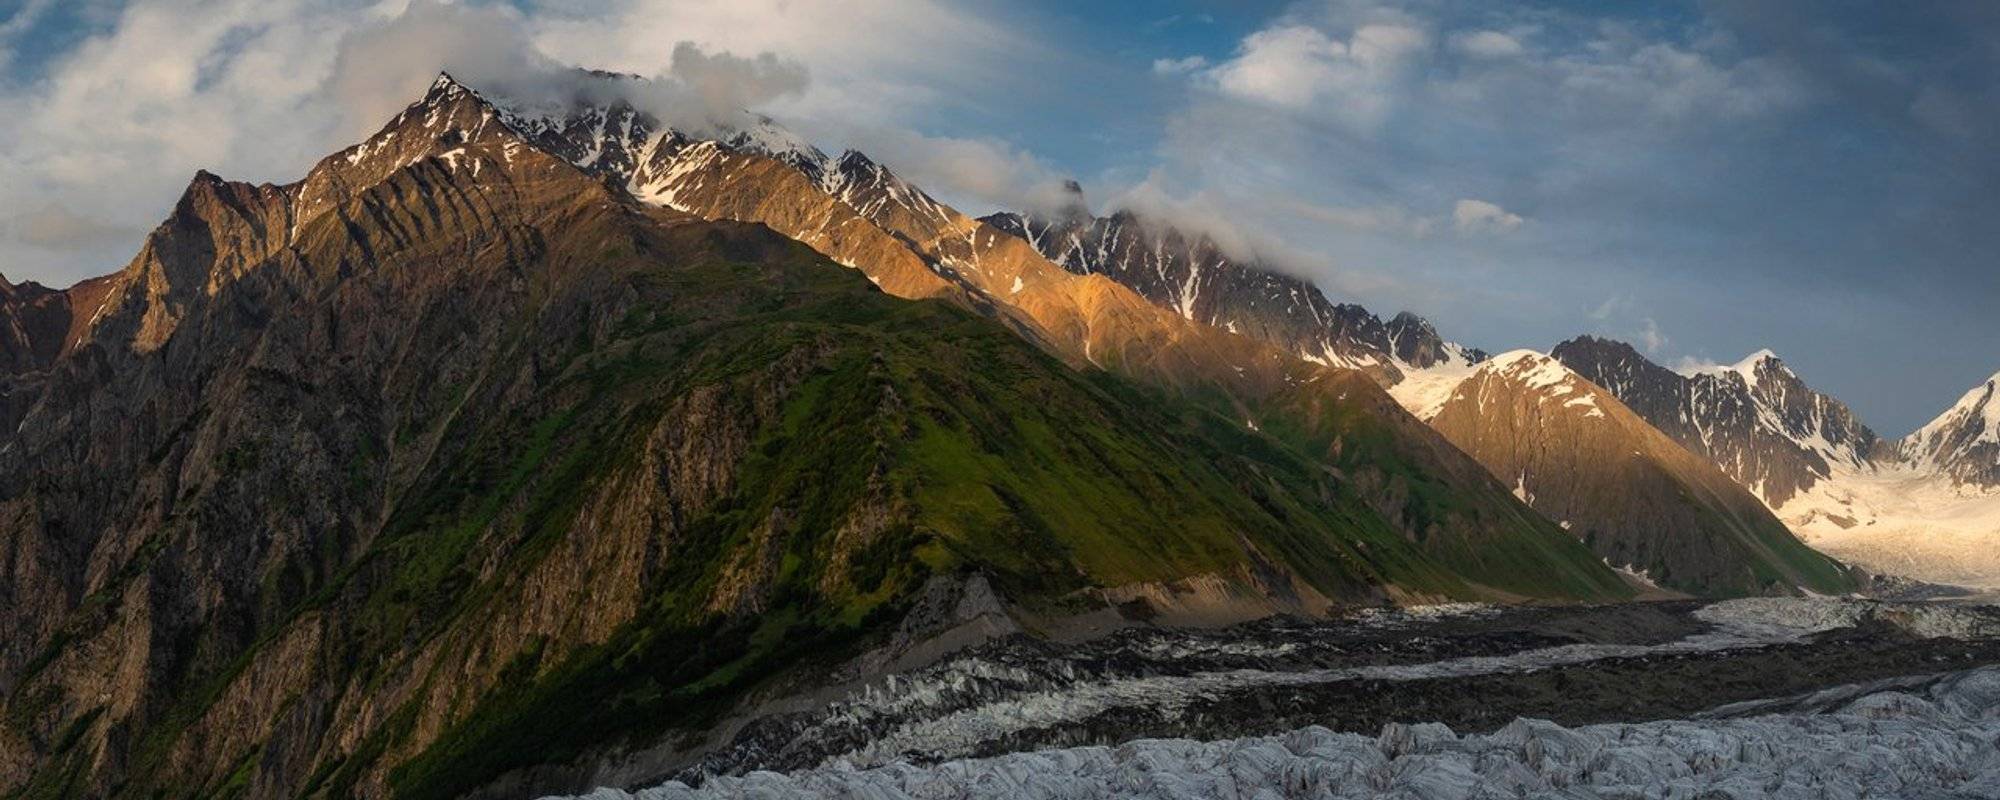 📷 The Land of High Mountains: Pakistan. Day 5. The road to Mount Rakaposhi - Base Camp